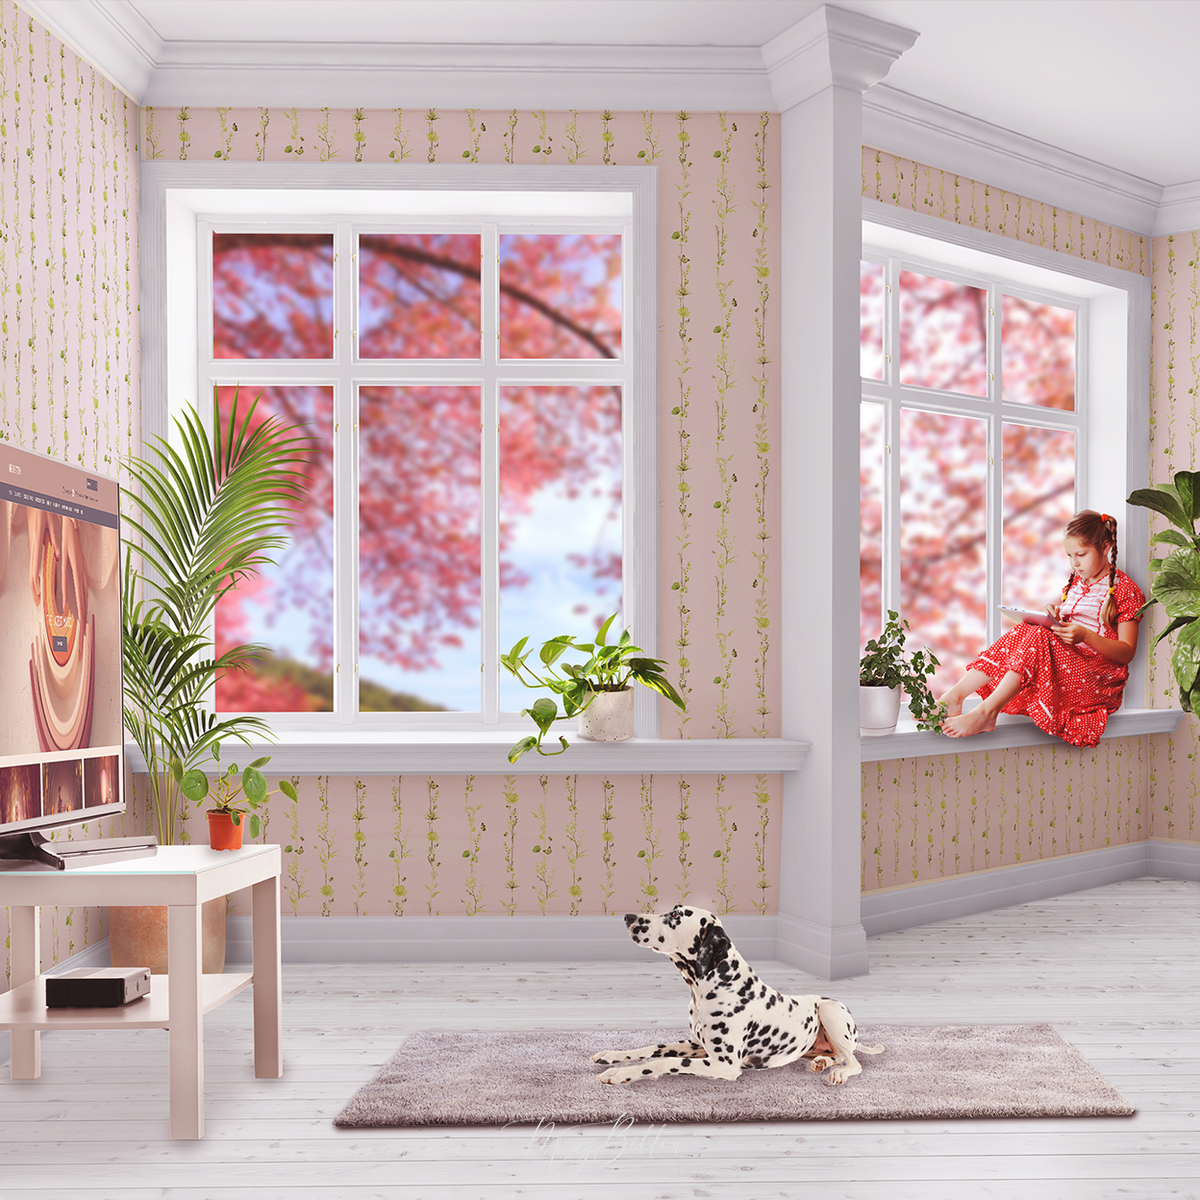 Building a Room: The Dalmatian's Spot - Meg Bitton Productions